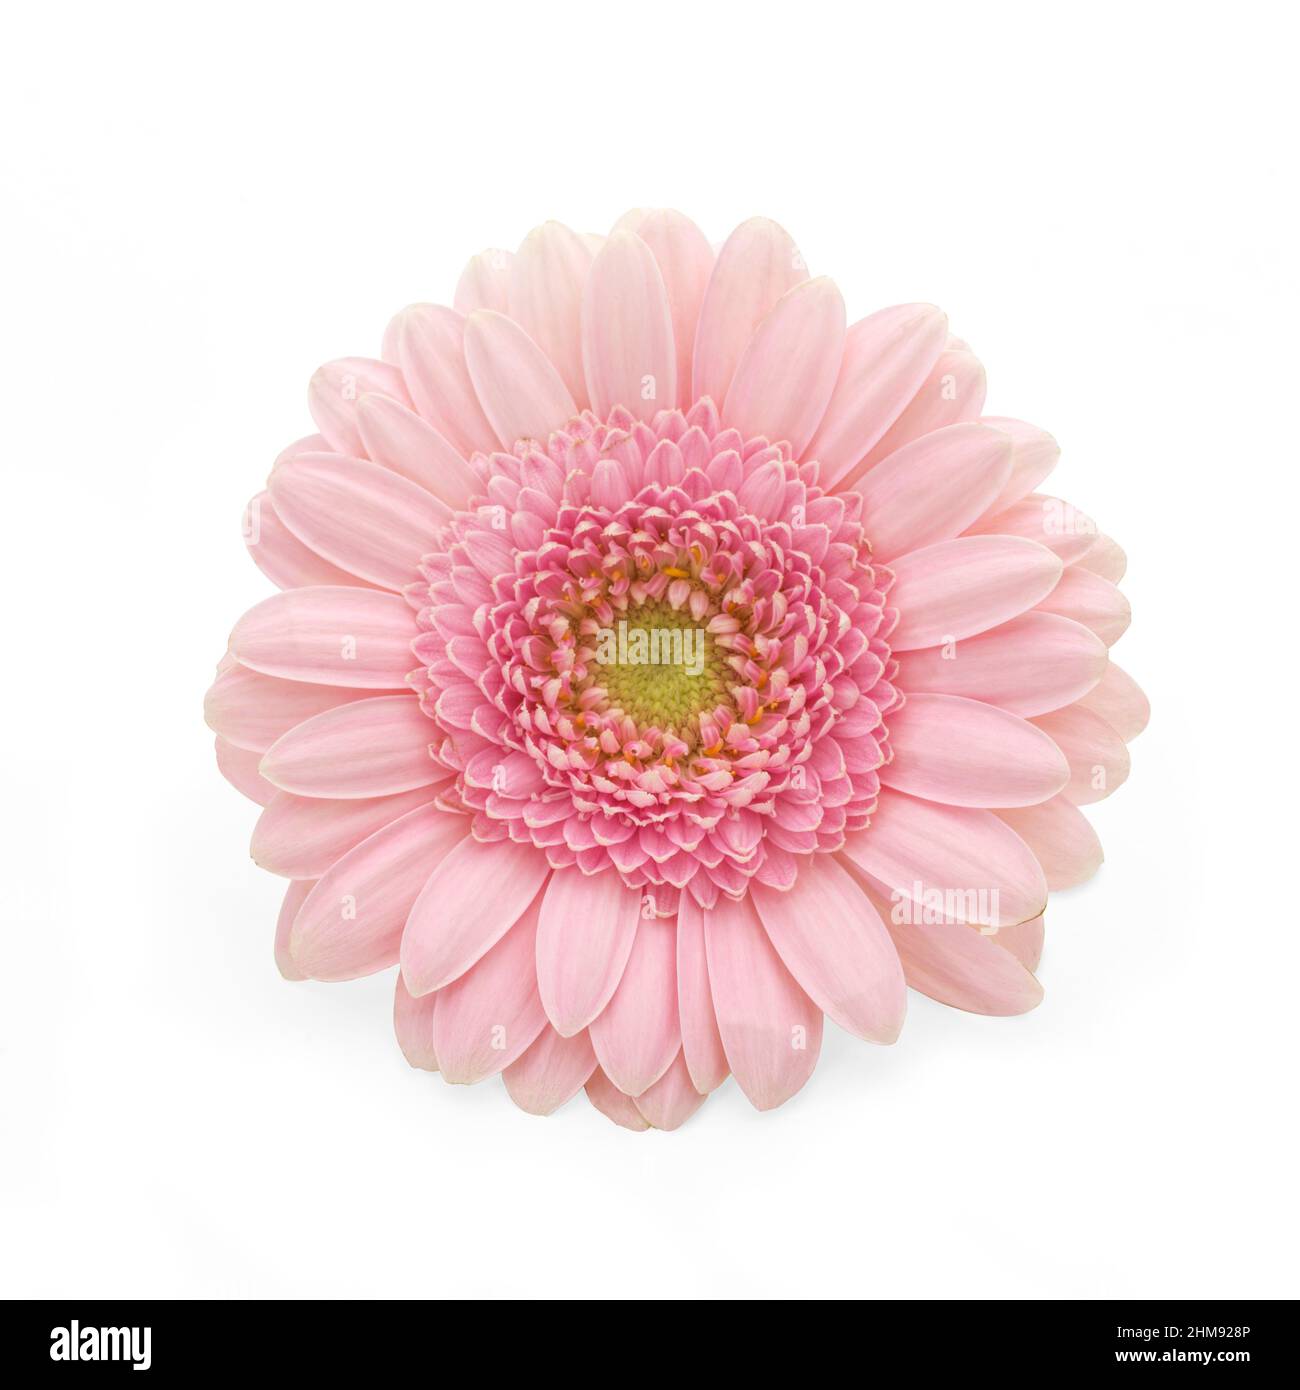 Pink Gerbera daisy type flower on white background Stock Photo